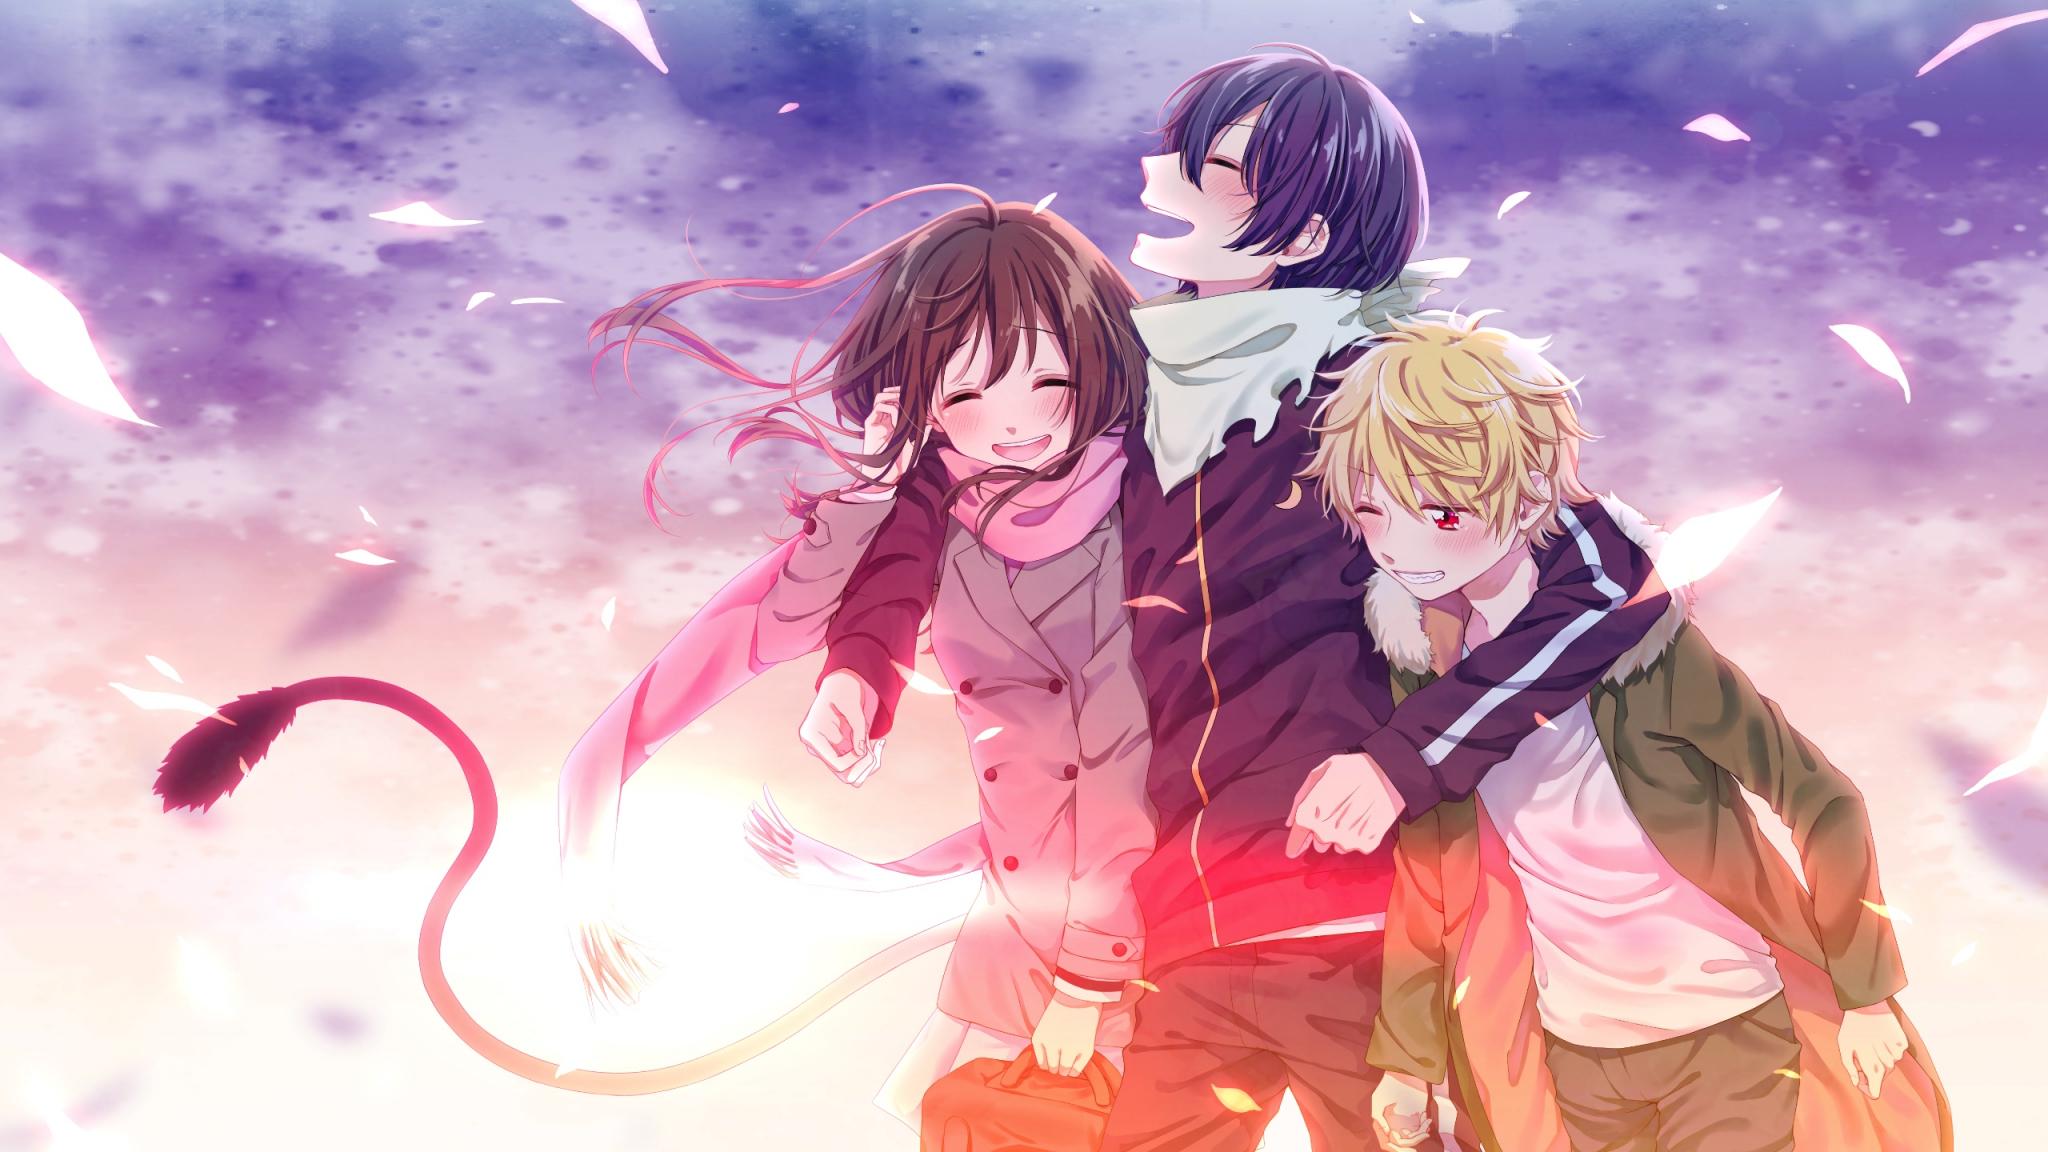 Friends three and friendship anime 1314563 on animeshercom